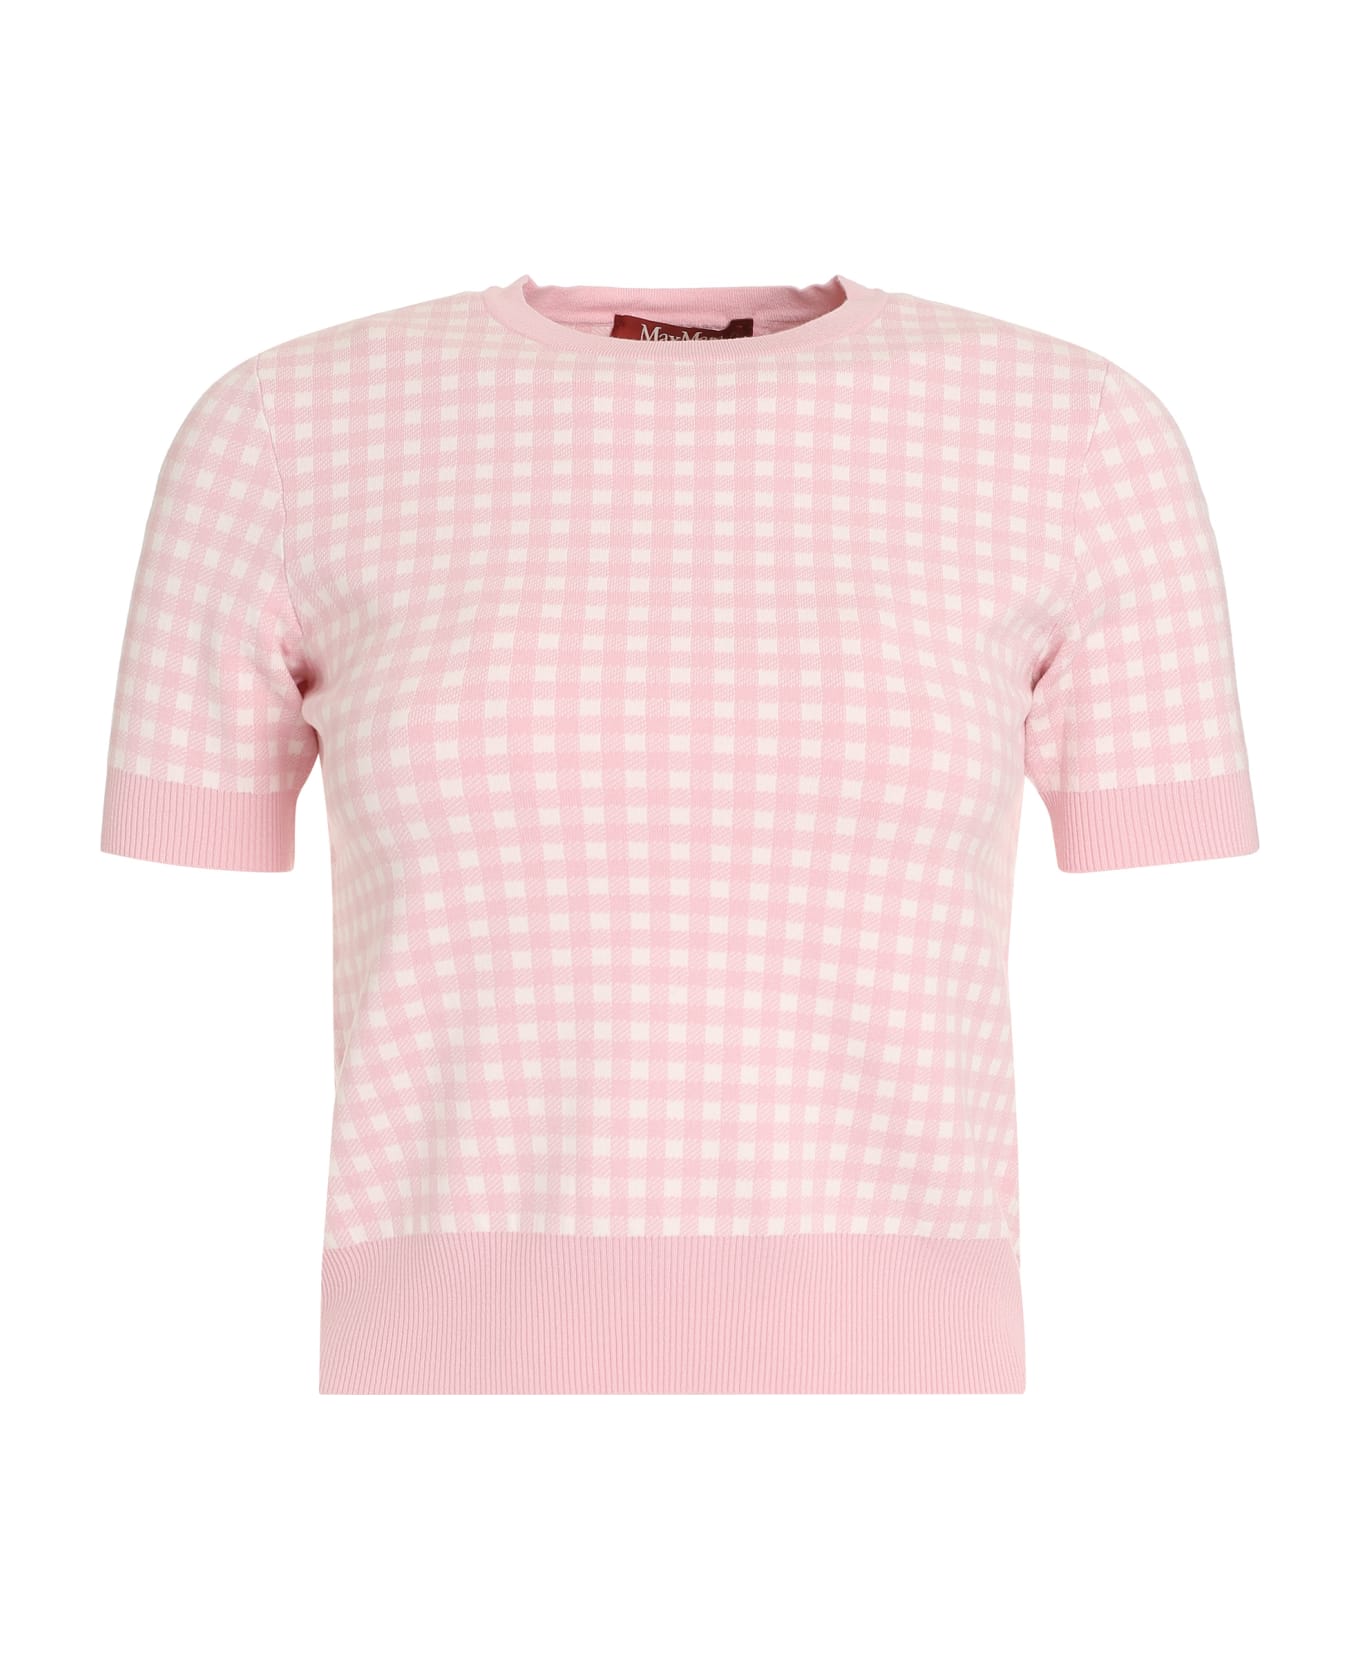 Max Mara Studio Epoca Knitted T-shirt - Pink Tシャツ